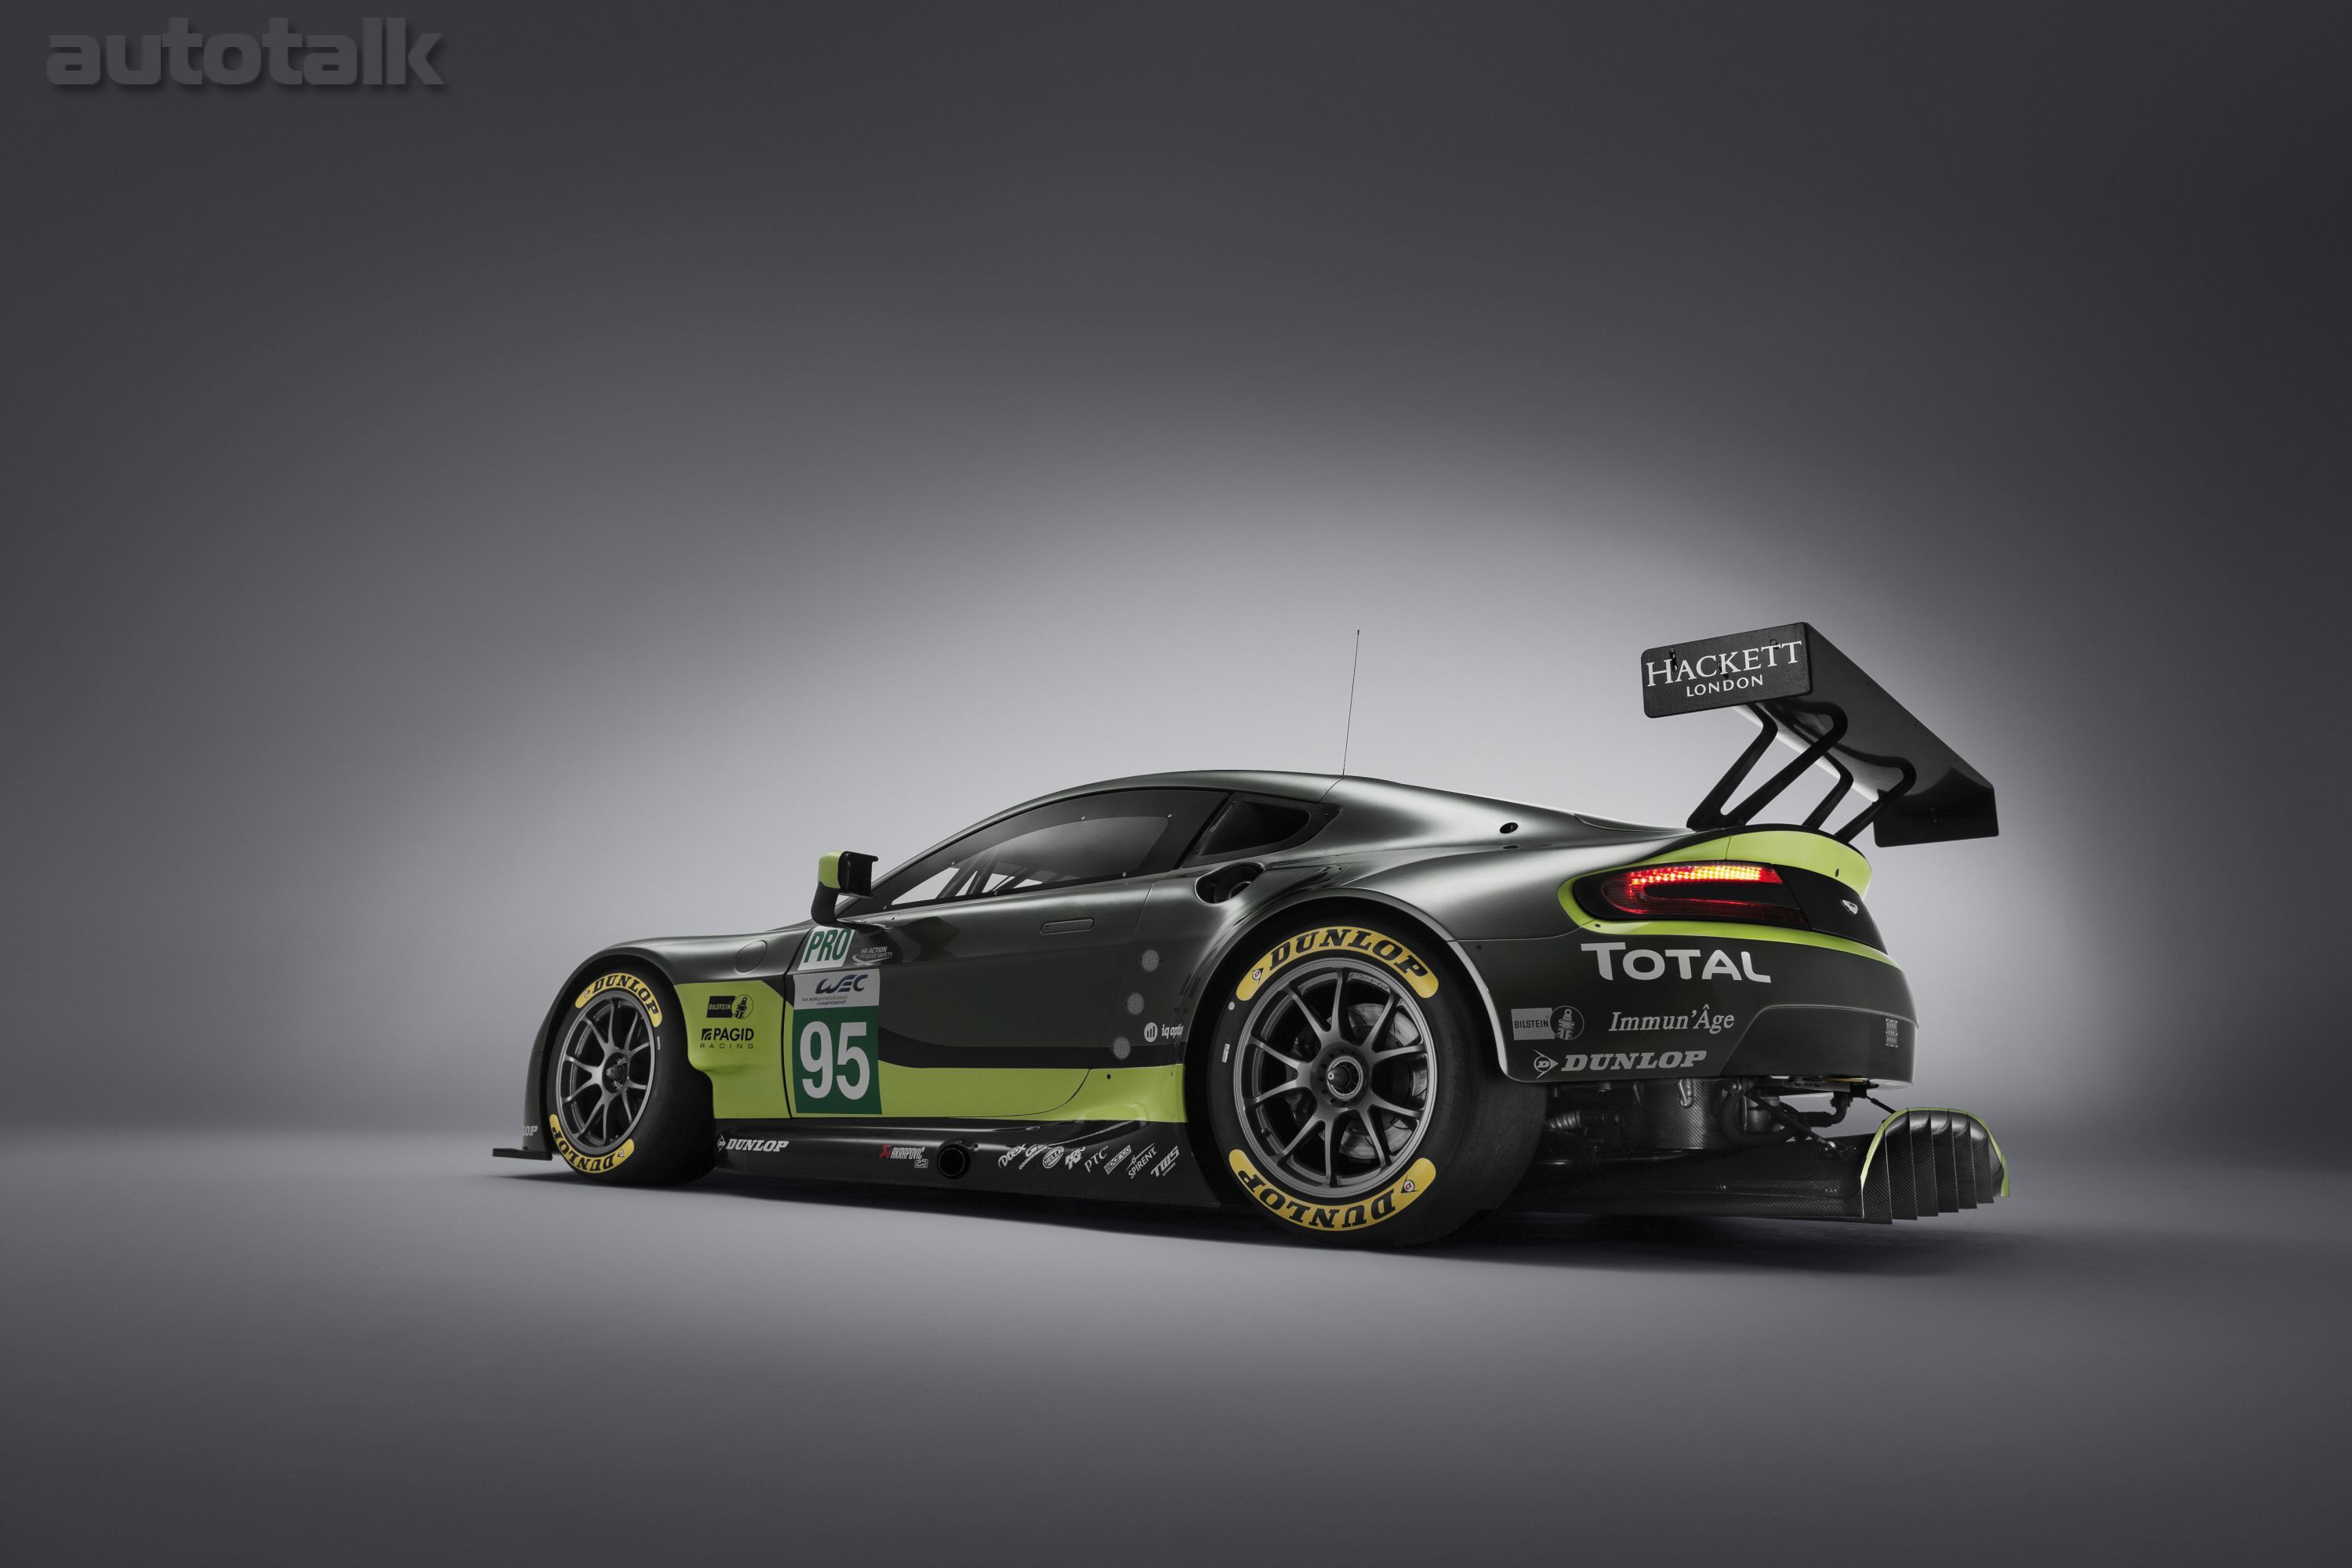 2016 Aston Martin V8 Vantage GTE